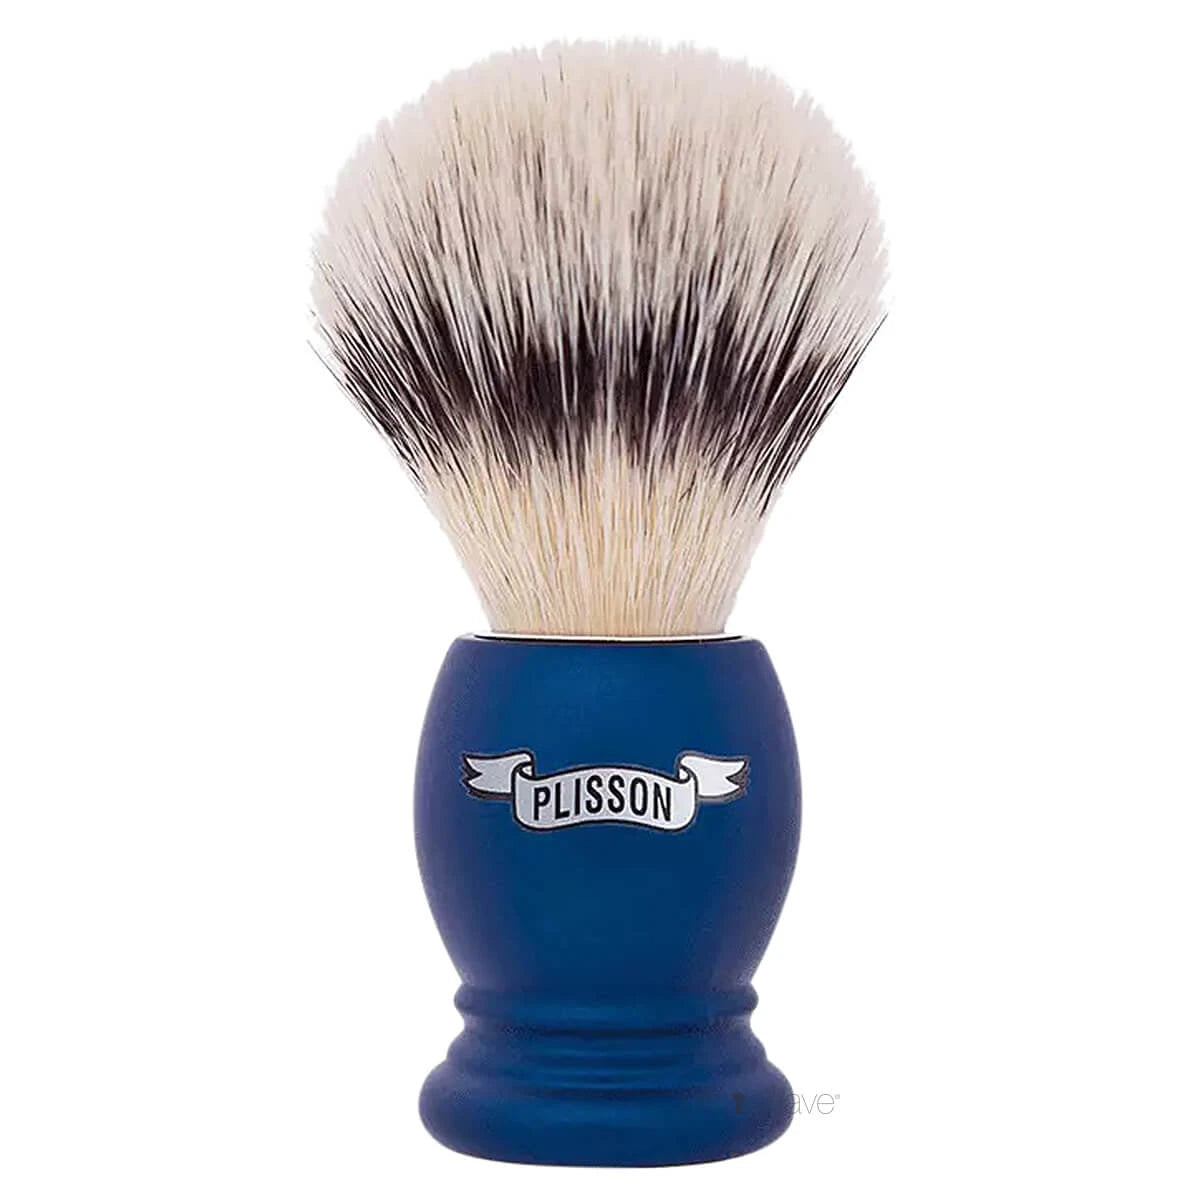 Plisson Shaving Brush, High Mountain White Fibre & Night Blue- Size 12